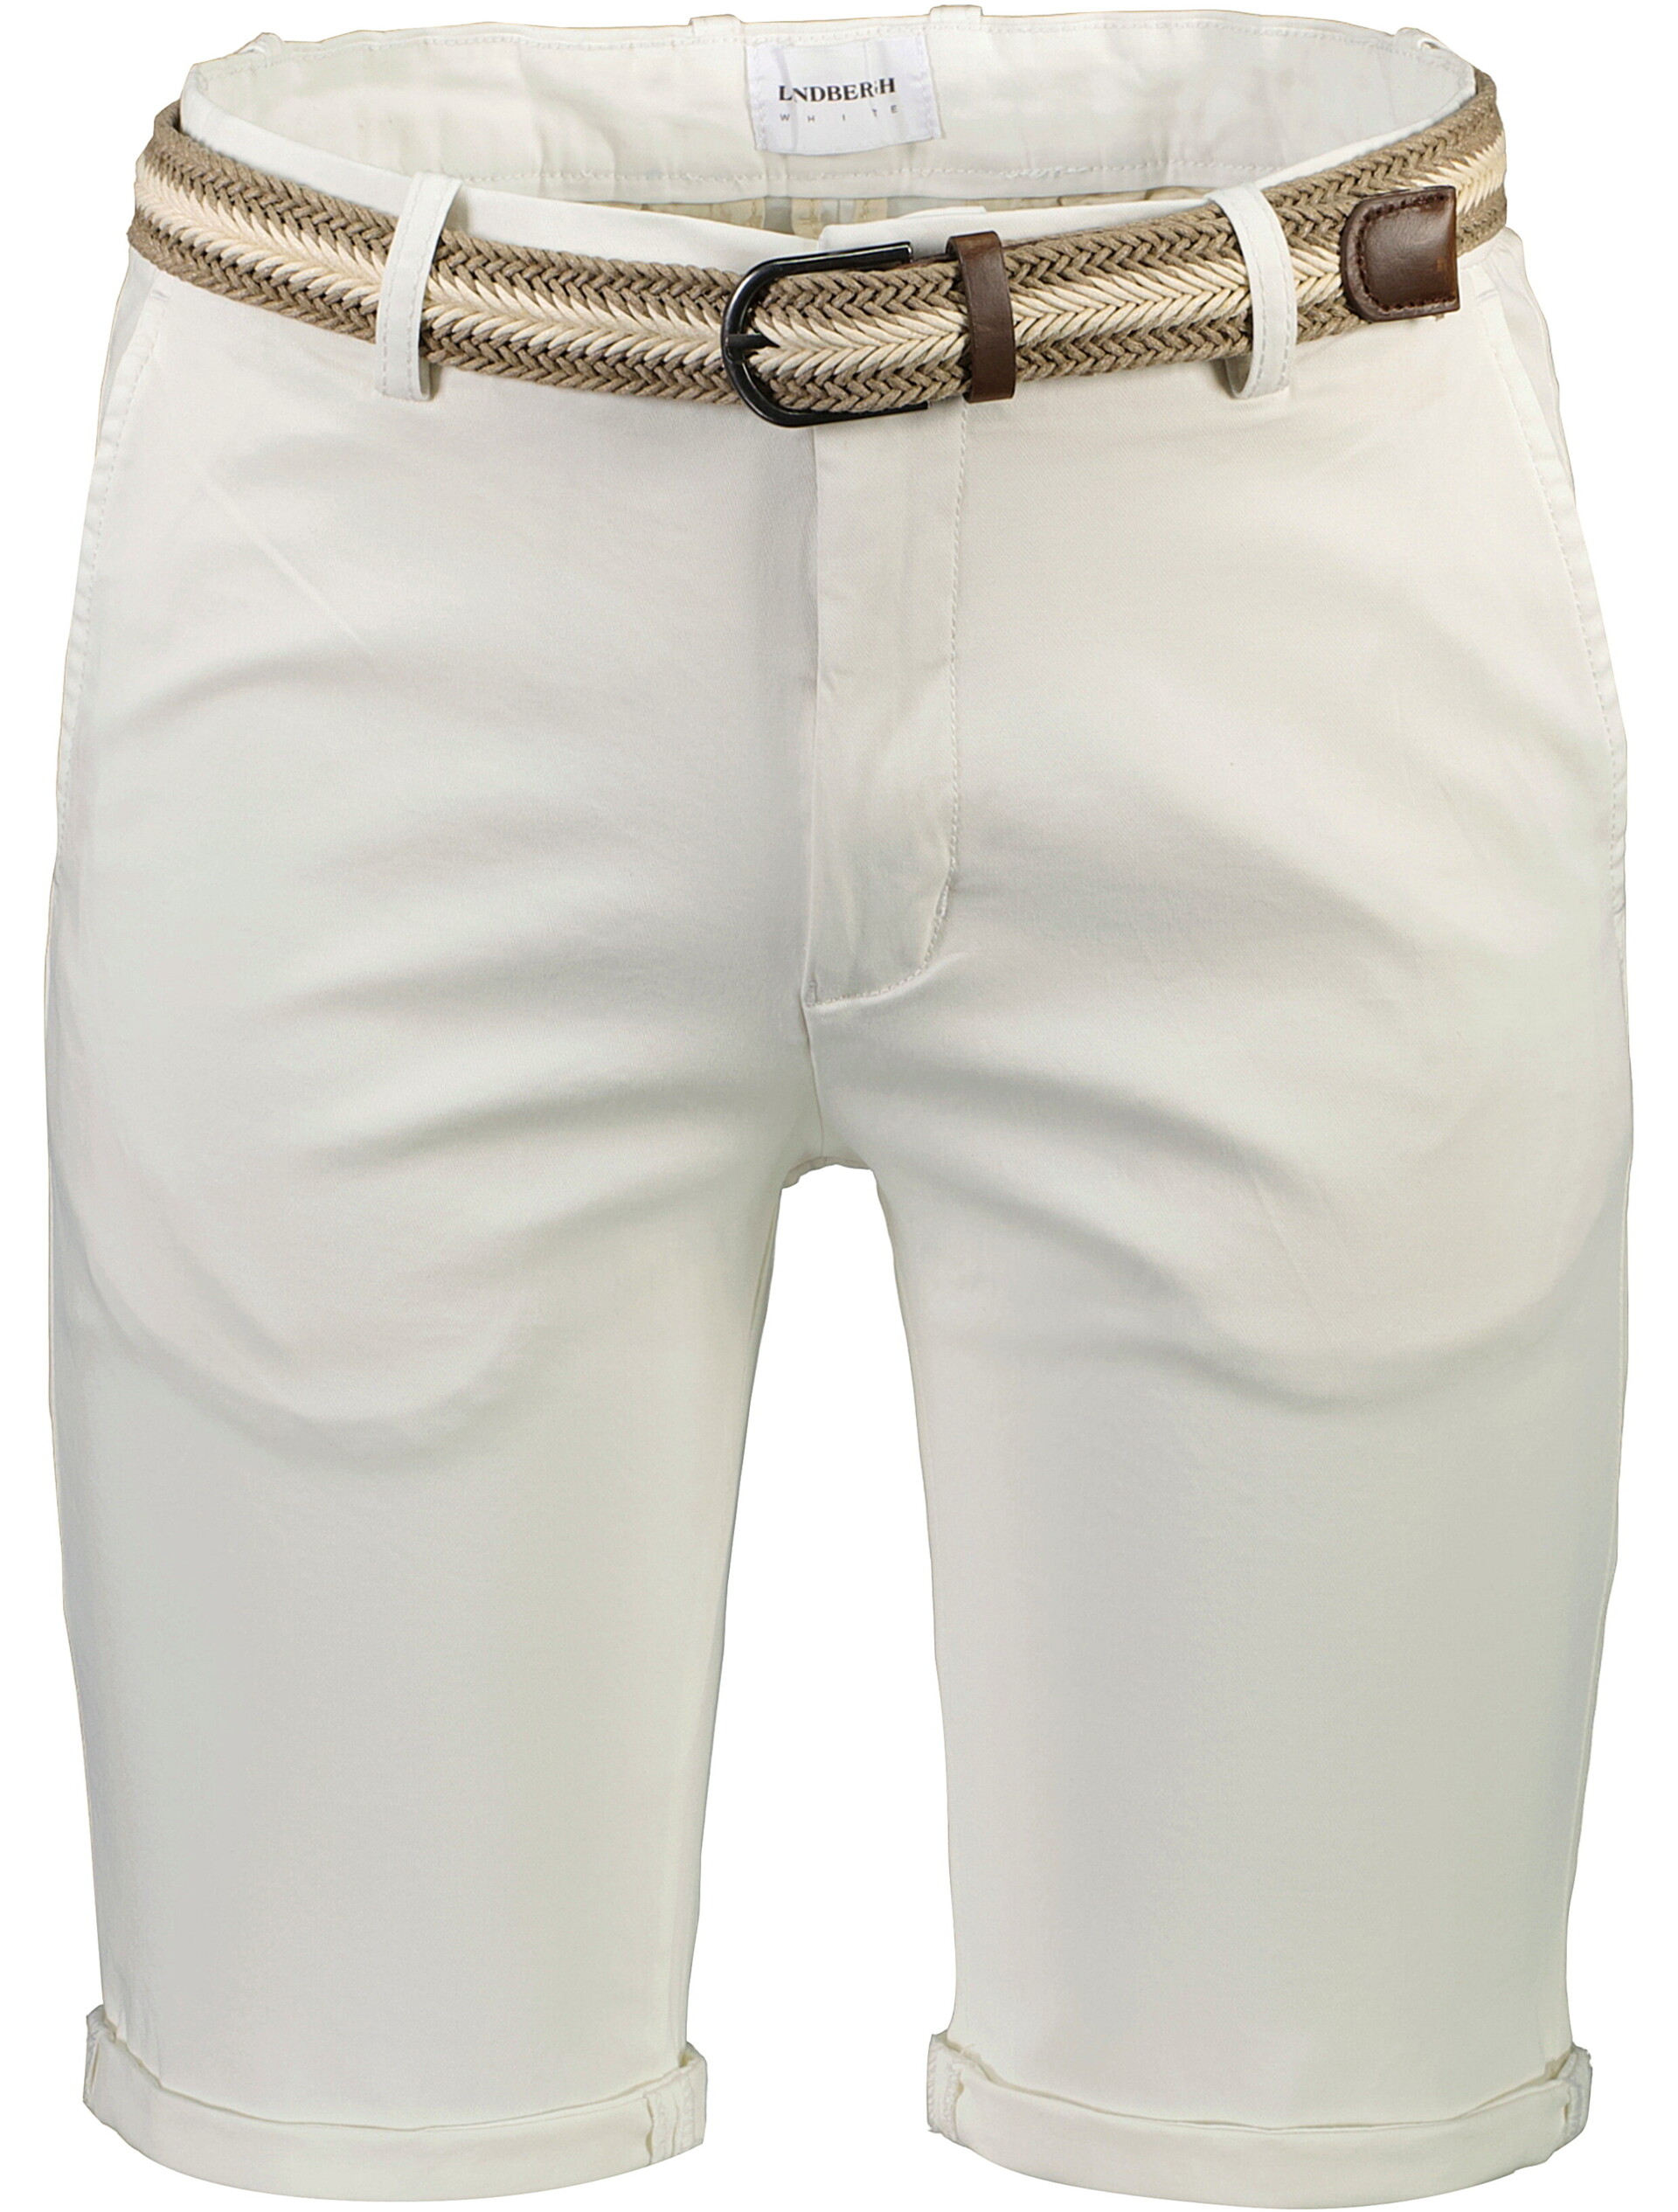 Lindbergh Chino-Shorts weiss / off white